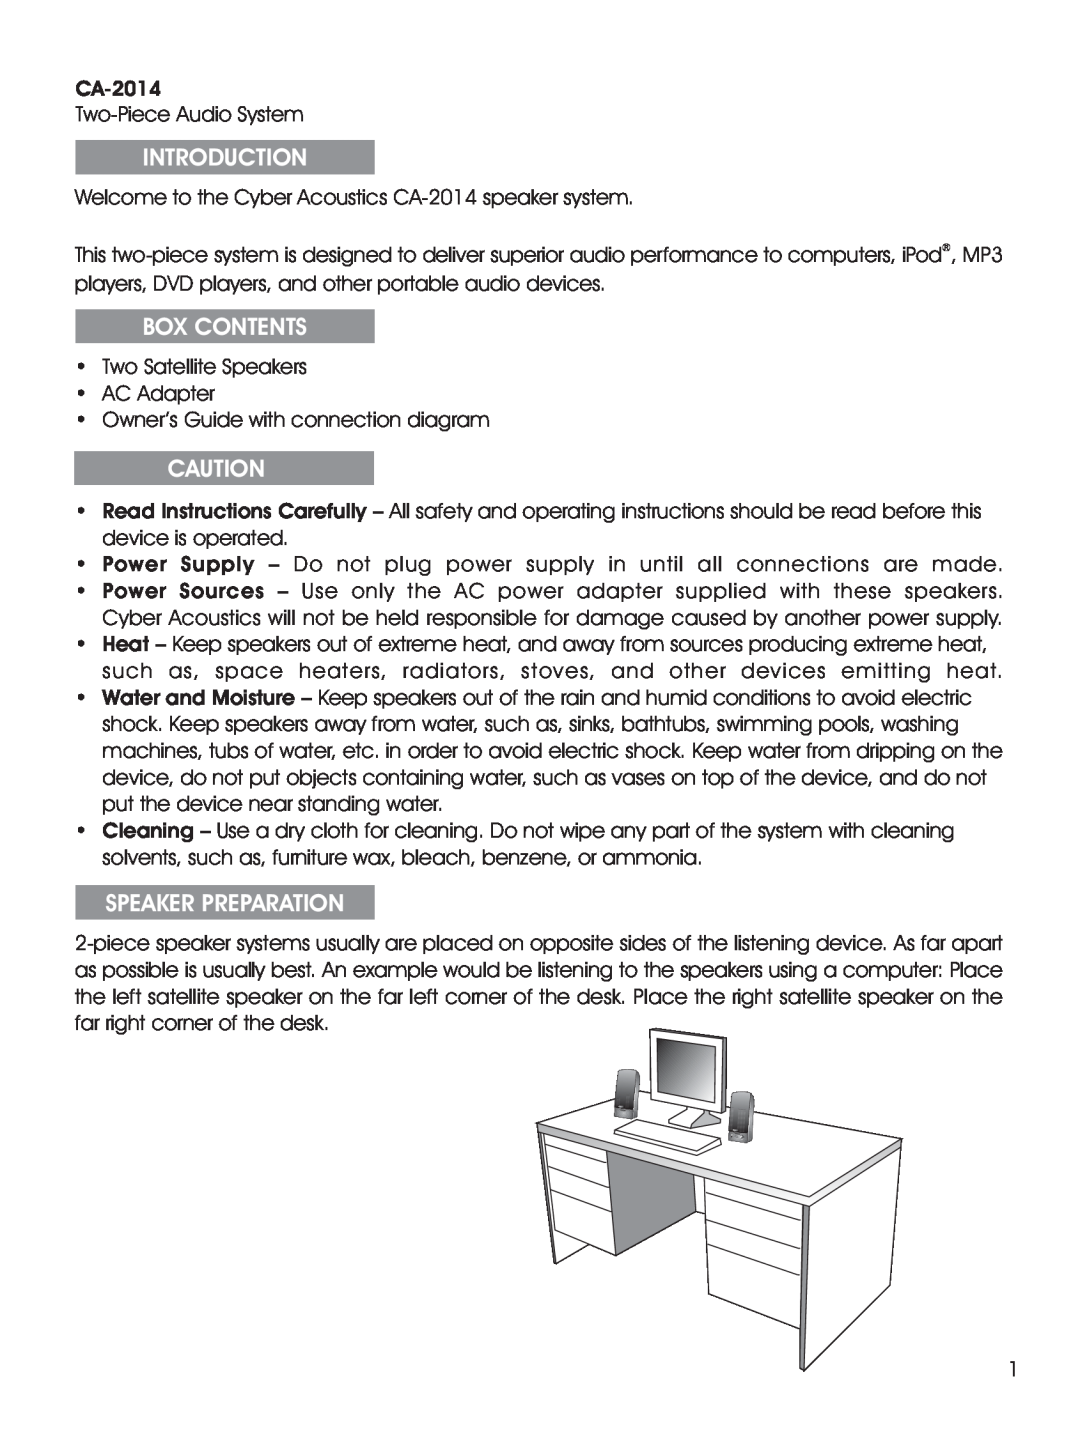 Cyber Acoustics CA-2014 manual Introduction, Box Contents, Speaker Preparation 